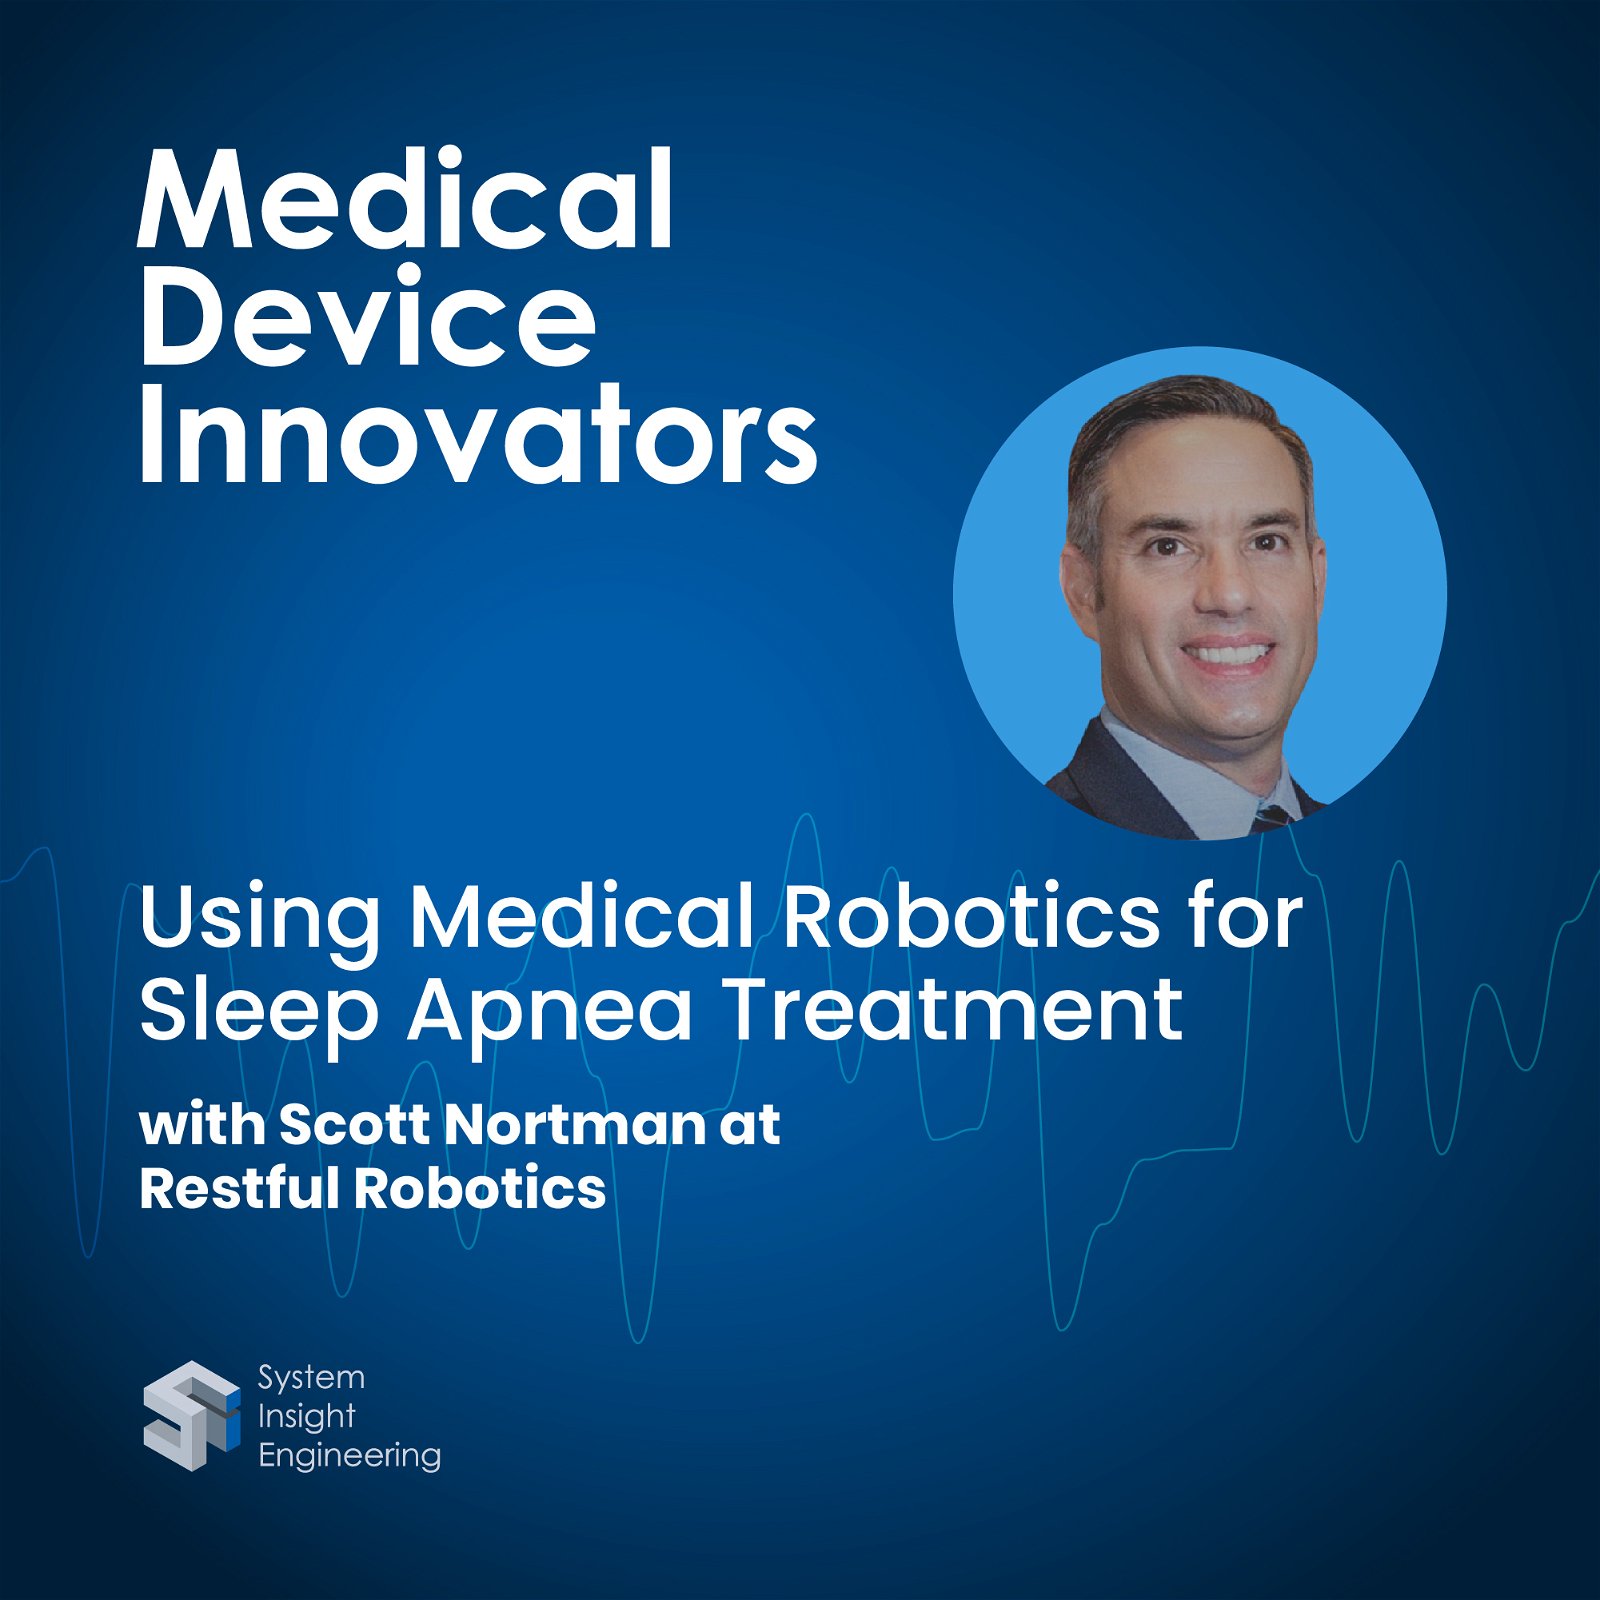 Using Medical Robotics for Sleep Apnea Treatment with Scott Nortman at Restful Robotics